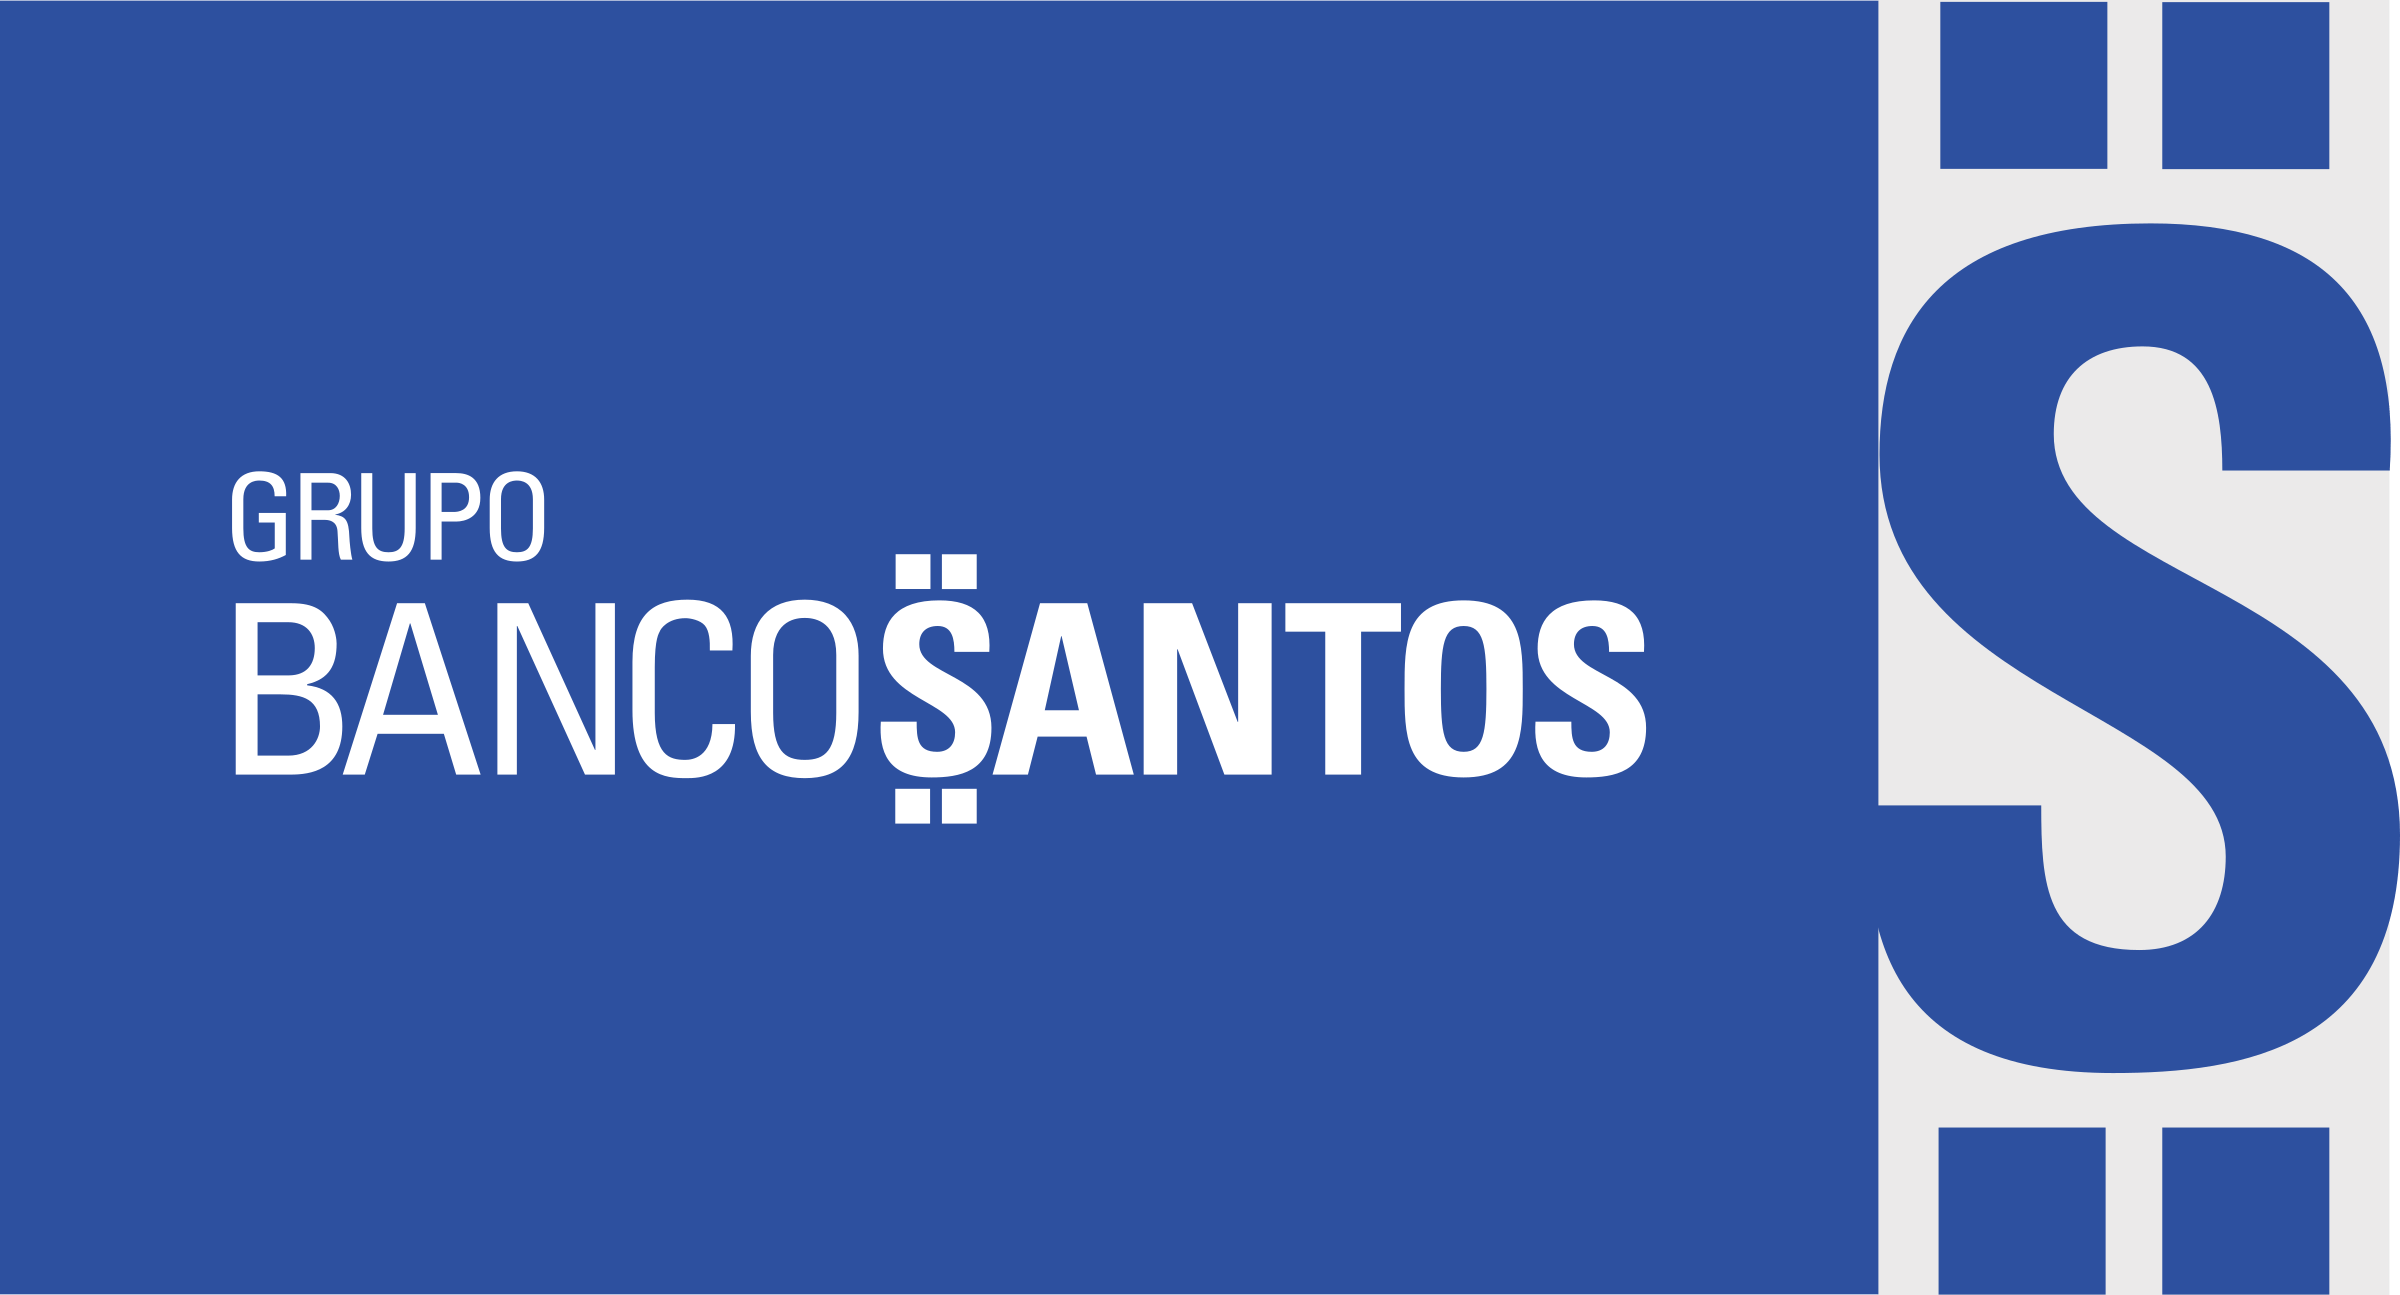 Santos Logo - banco santos Logo PNG Transparent & SVG Vector - Freebie Supply